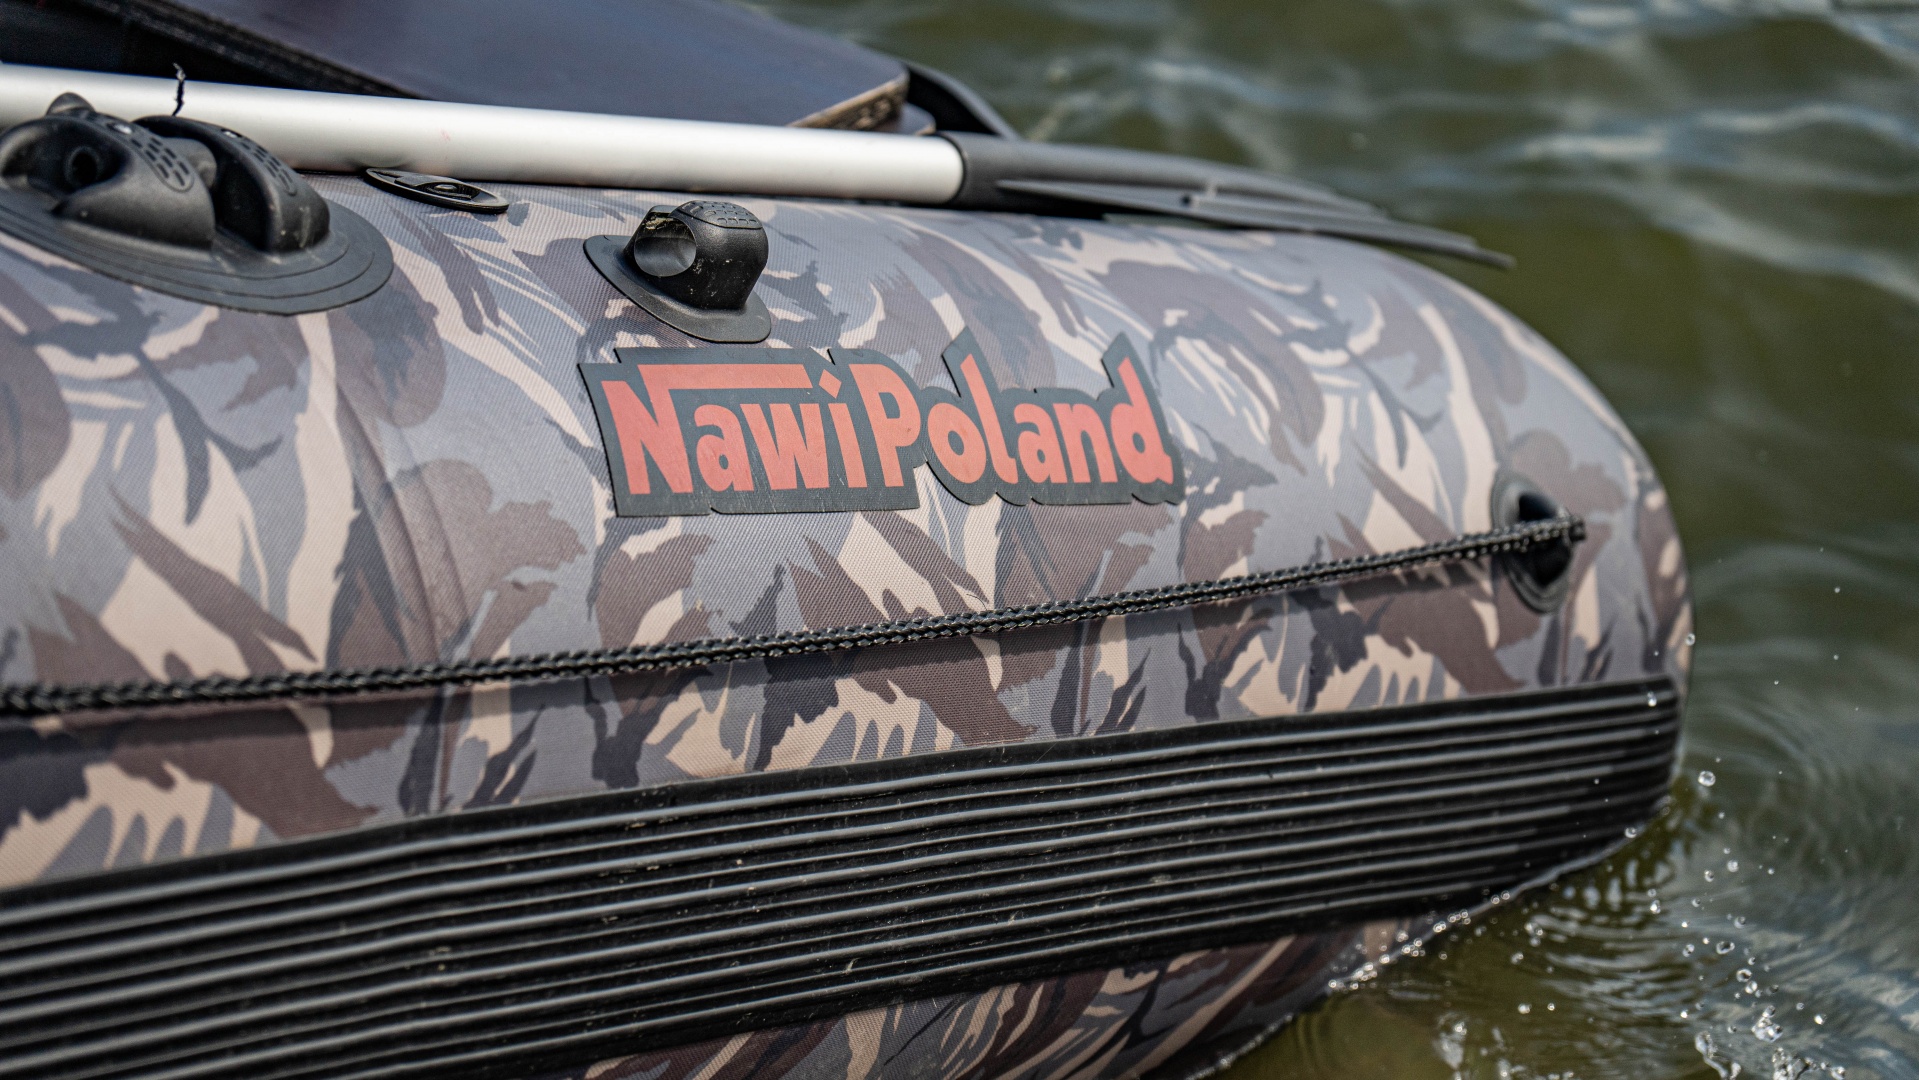 NawiPoland CAT 220 Inflatable Boat  - Katamaran